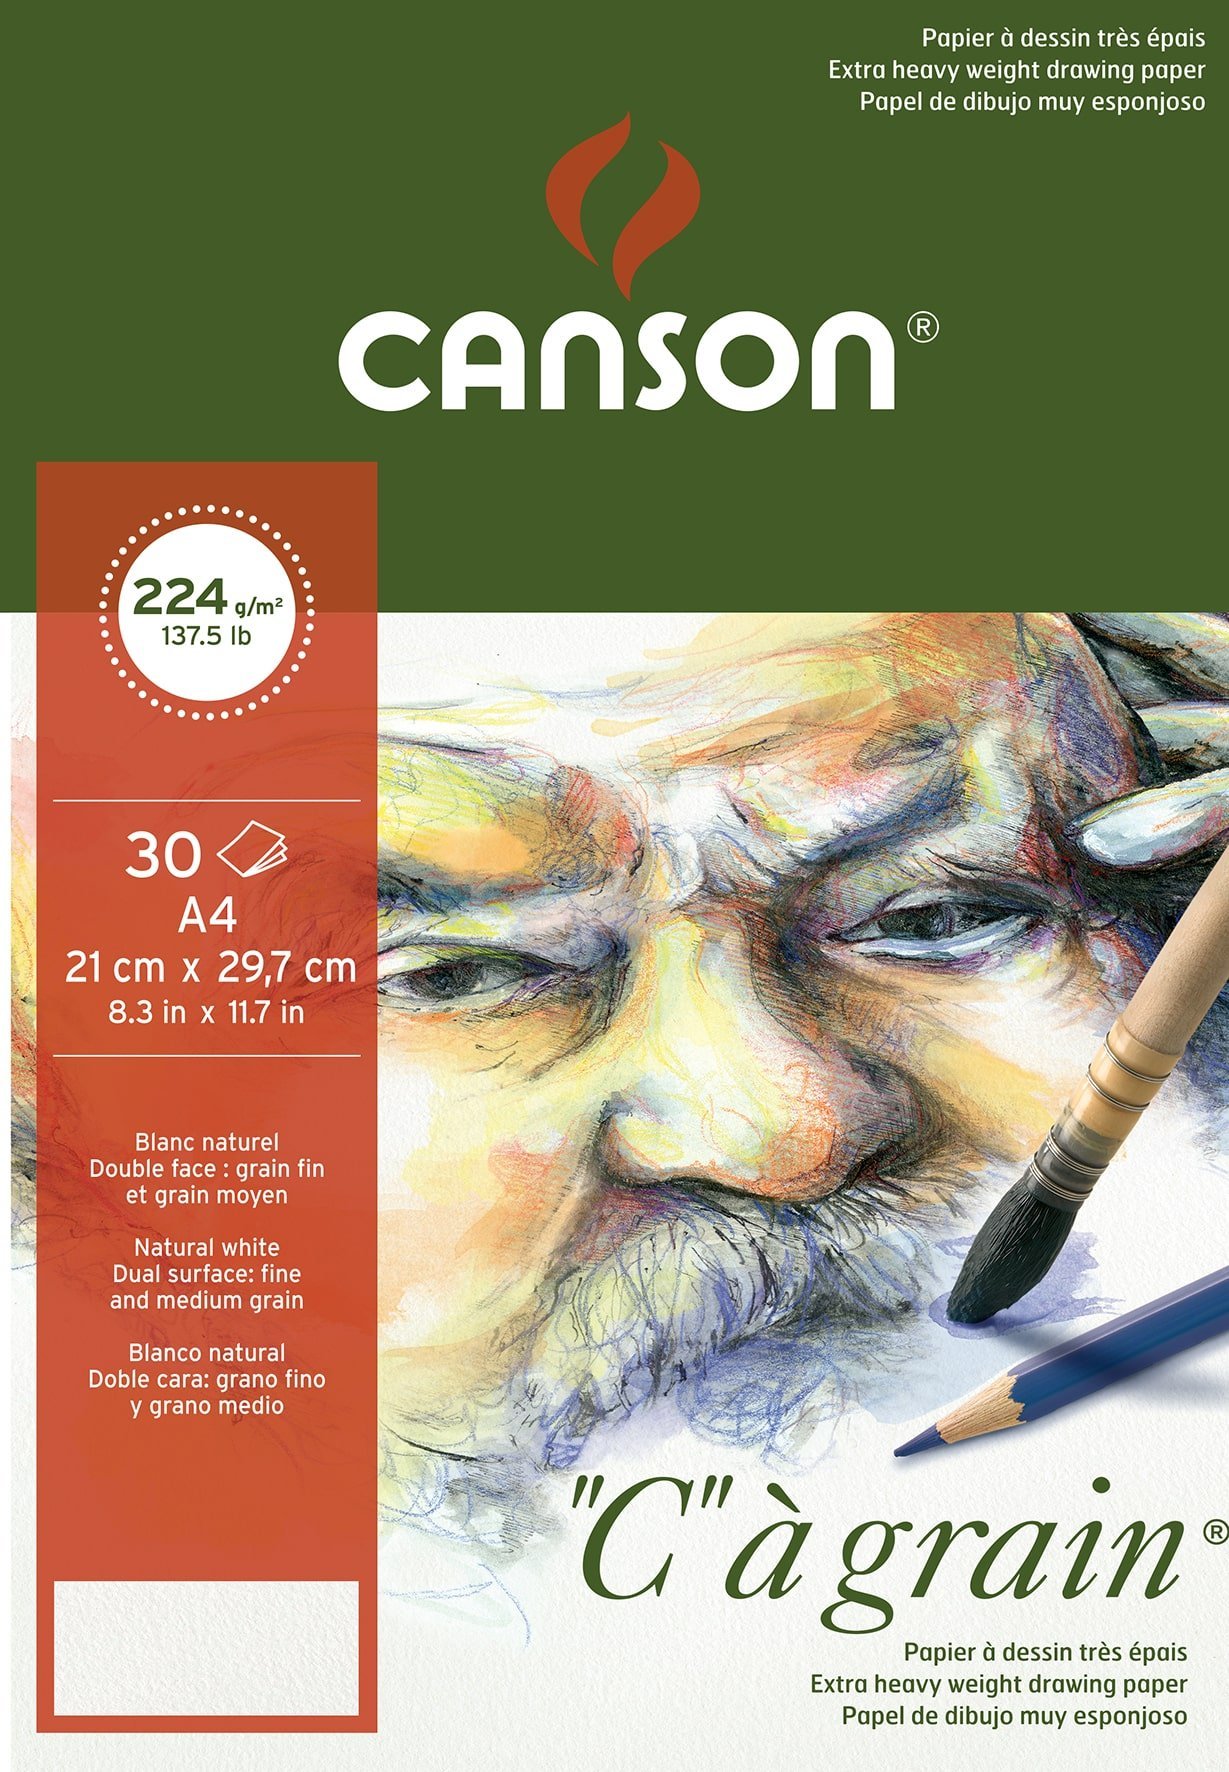 Canson ''C'' à grain Eskiz Çizim Defteri A4 224gr 30yp